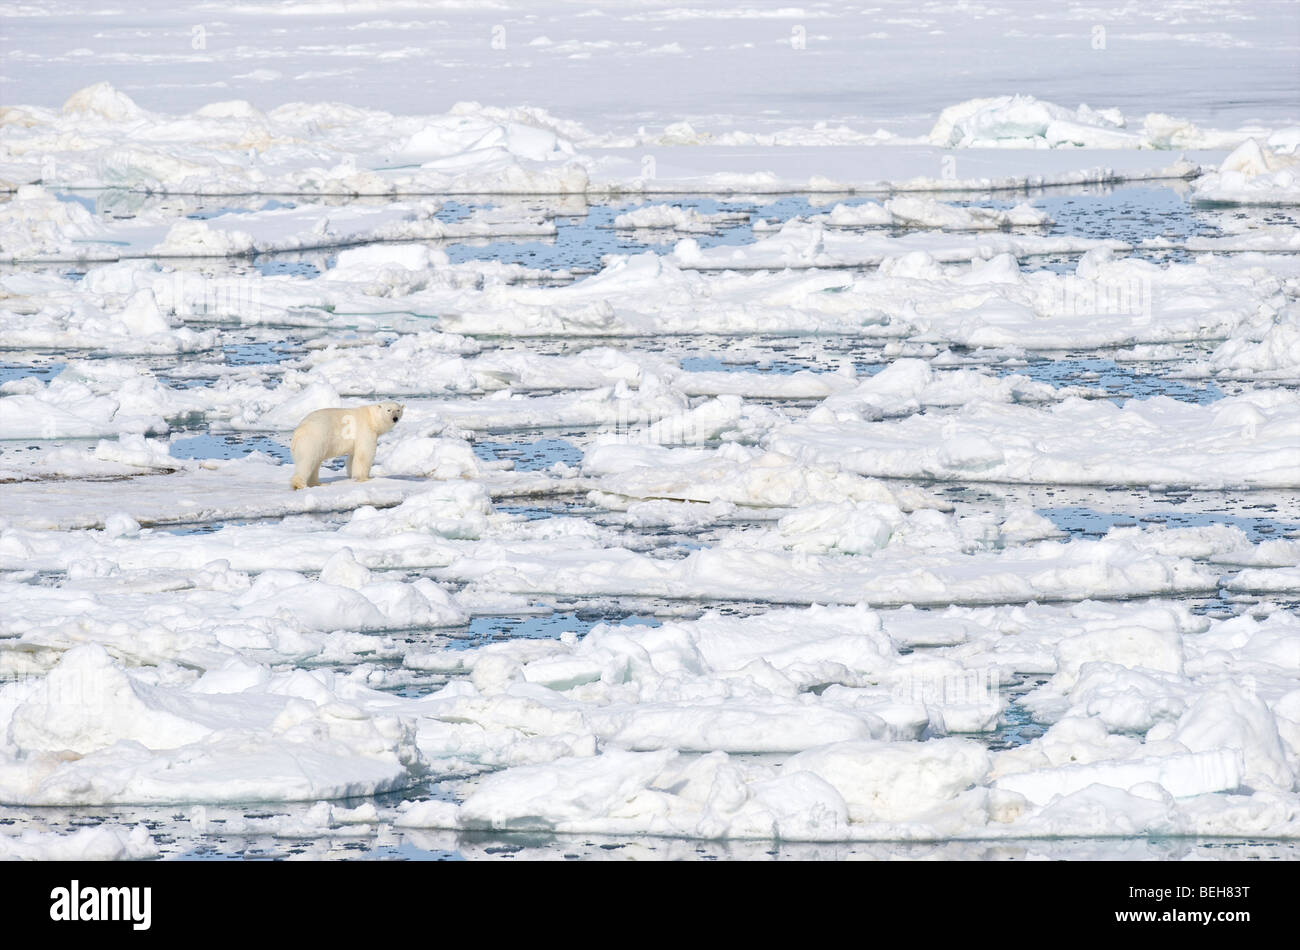 Spitsbergen, Svalbard, orso polare sulla banchisa vicino a mille isole Foto Stock